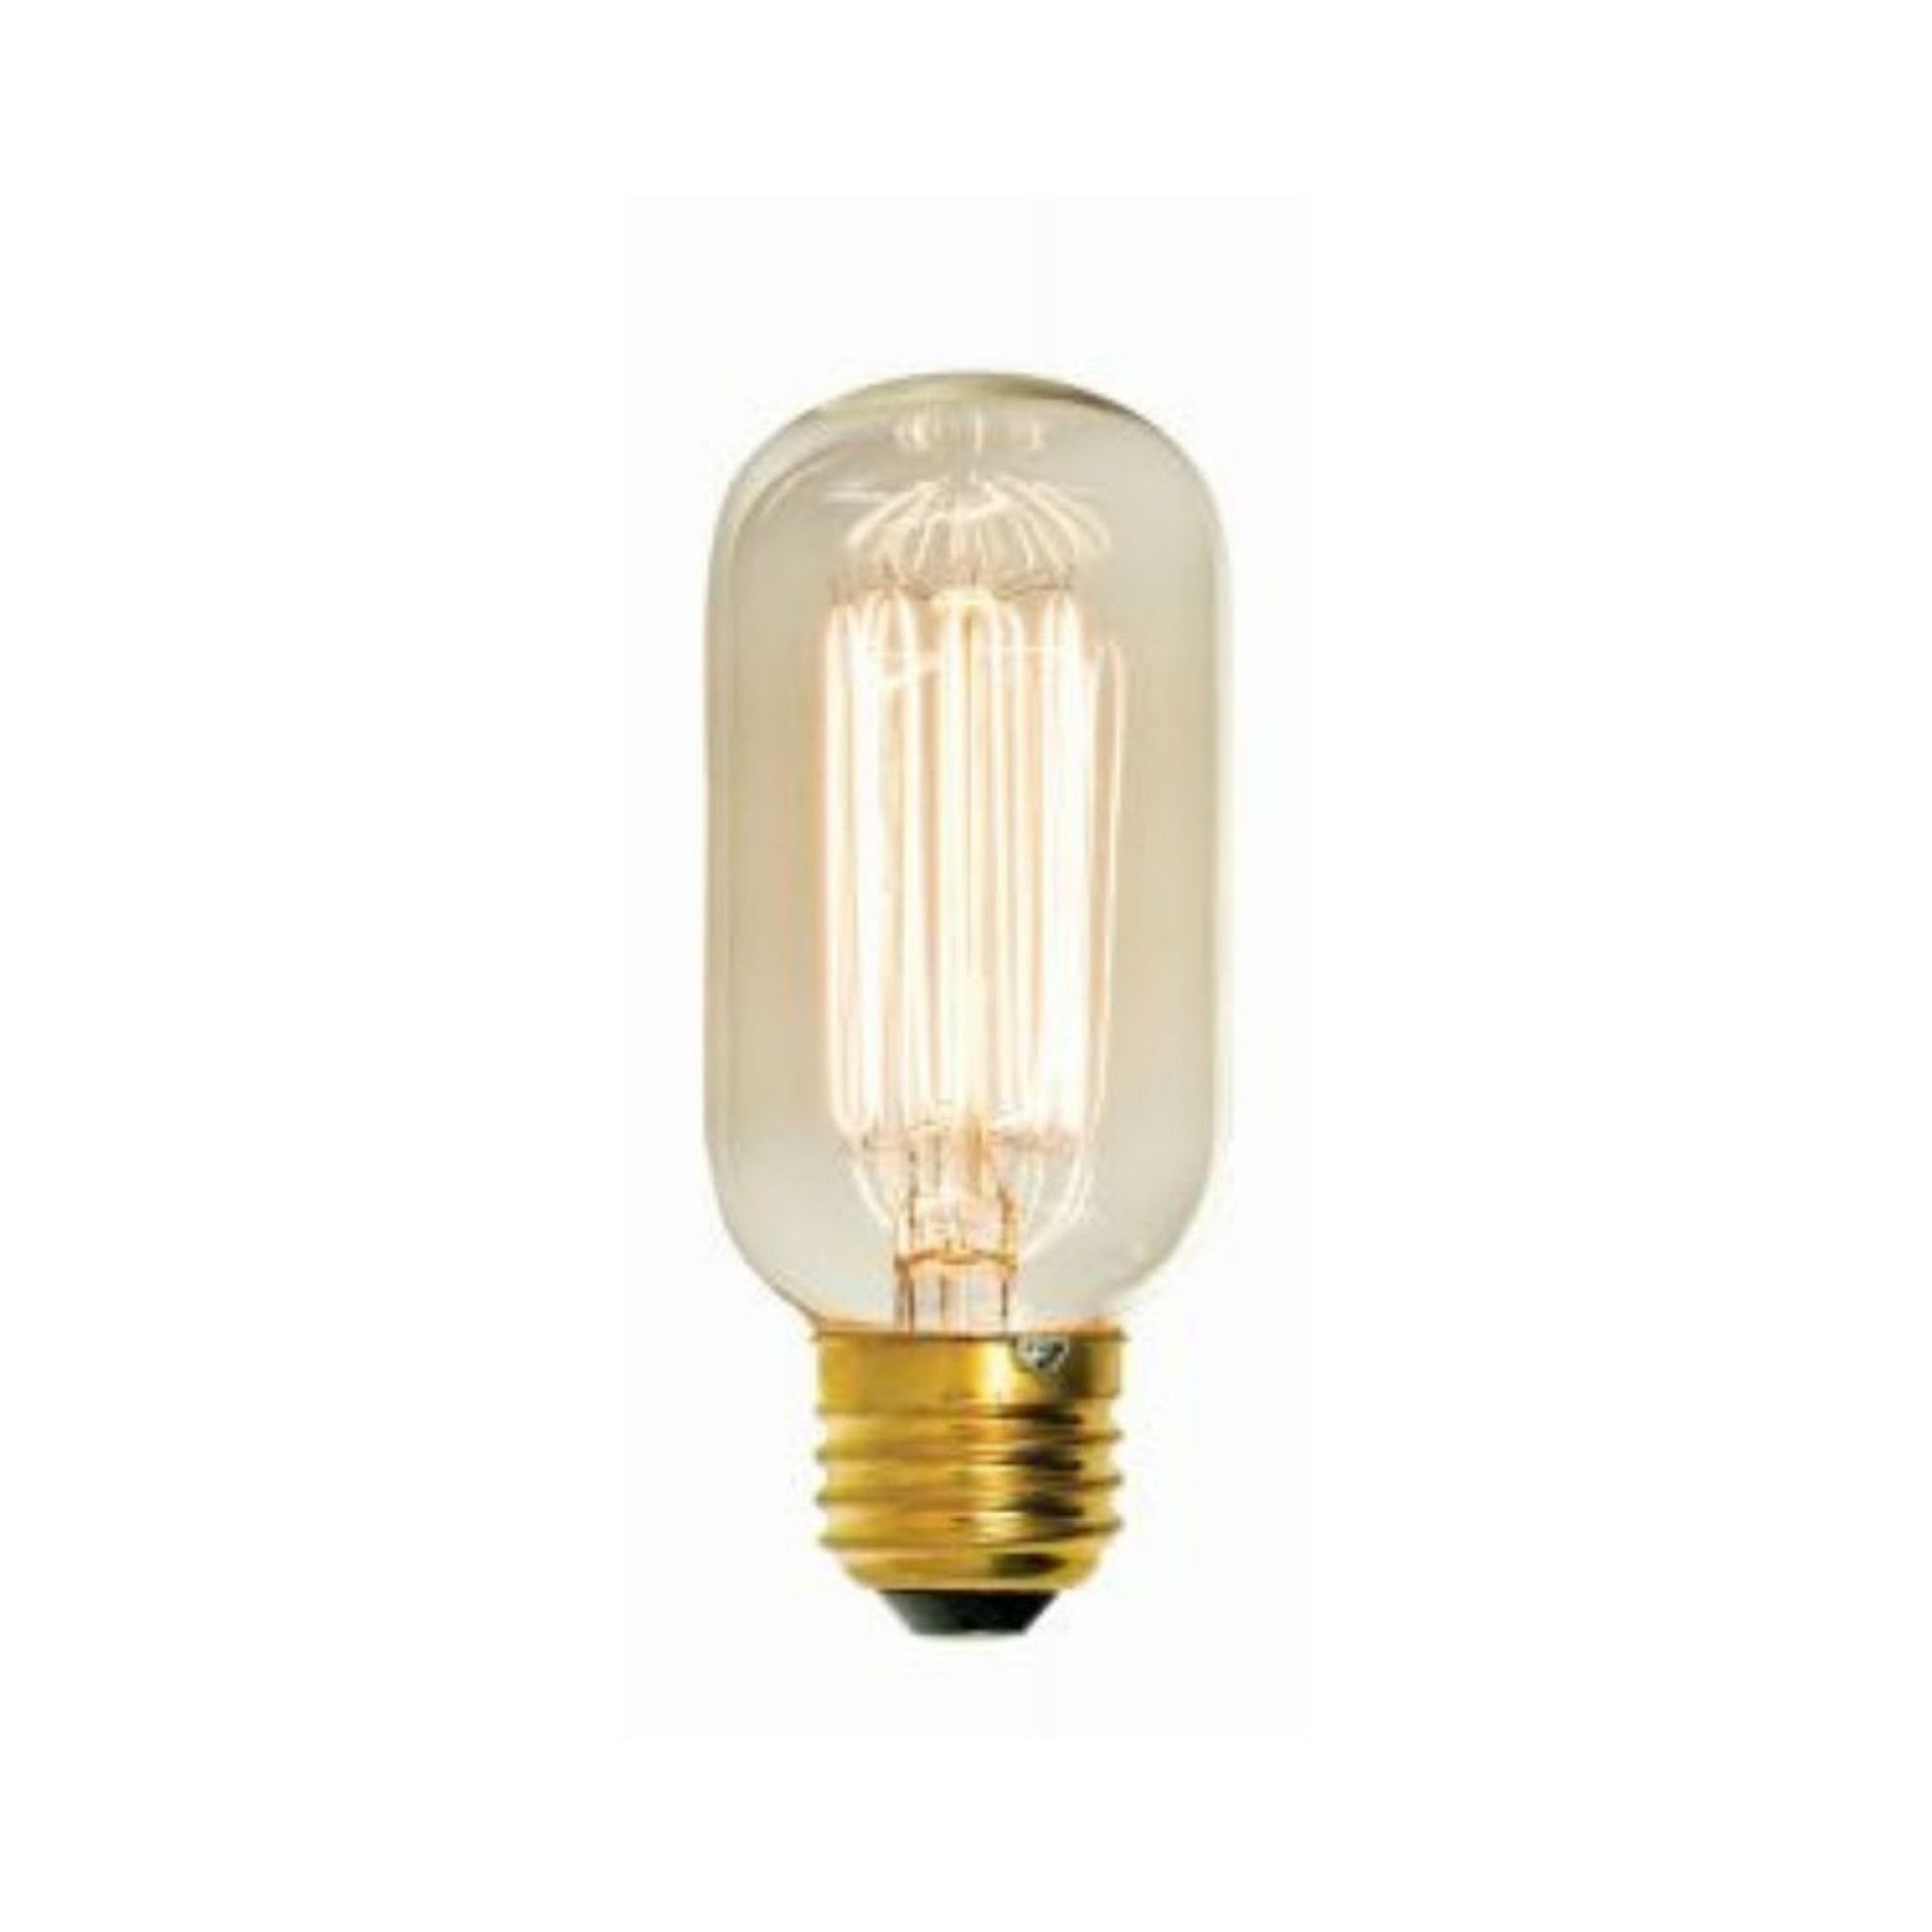 Craftmade 40-Watt T14 Clear Amber Finish, E26 Medium Base, 4.3" M.O.L., 2200K Warm White Incandenscent Light Bulb